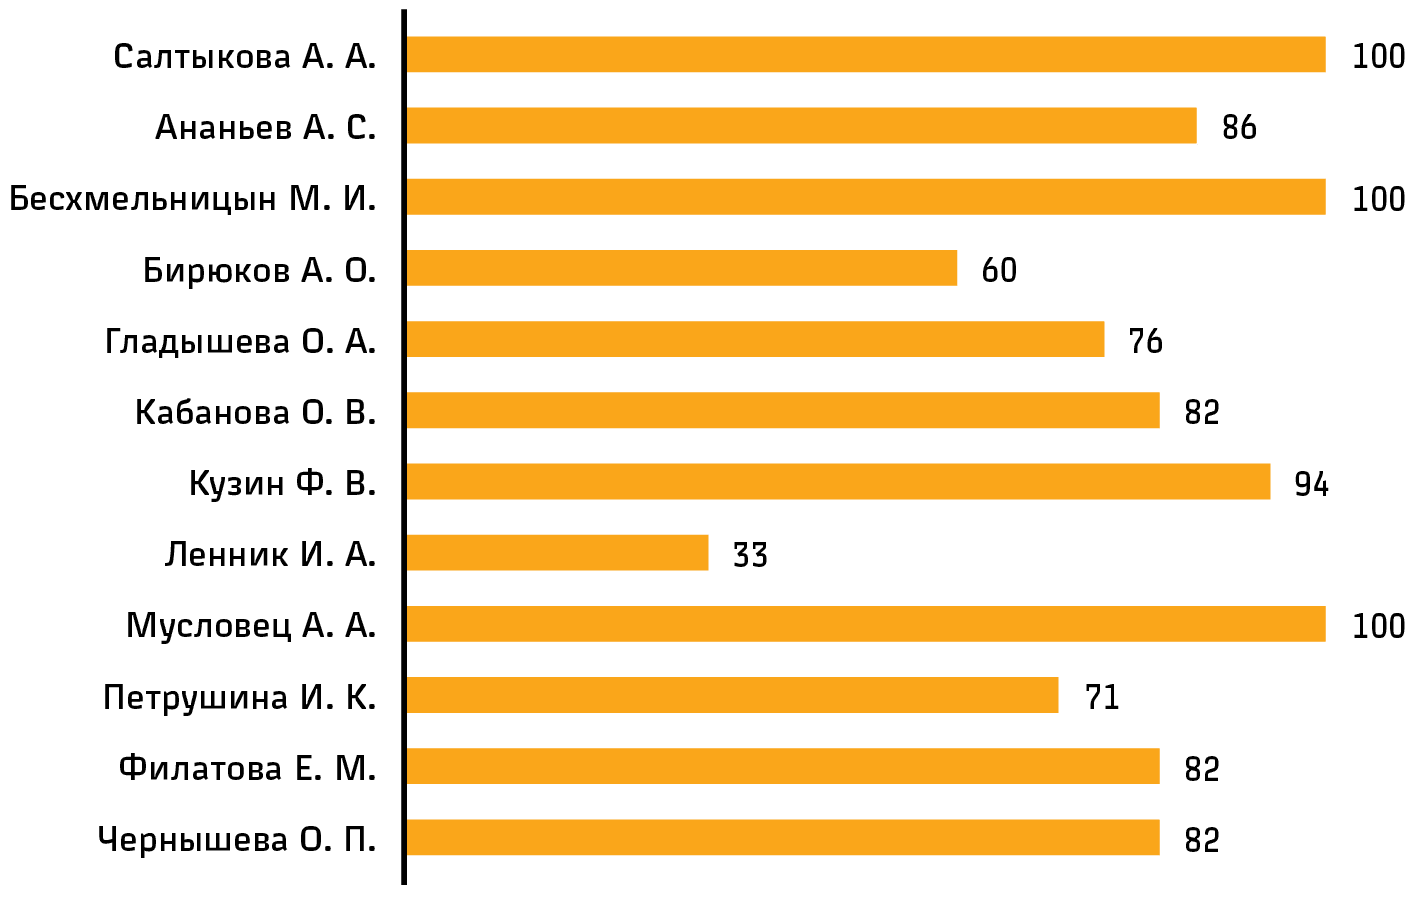 Статистика участия в заседаниях Комитета в 2019 году